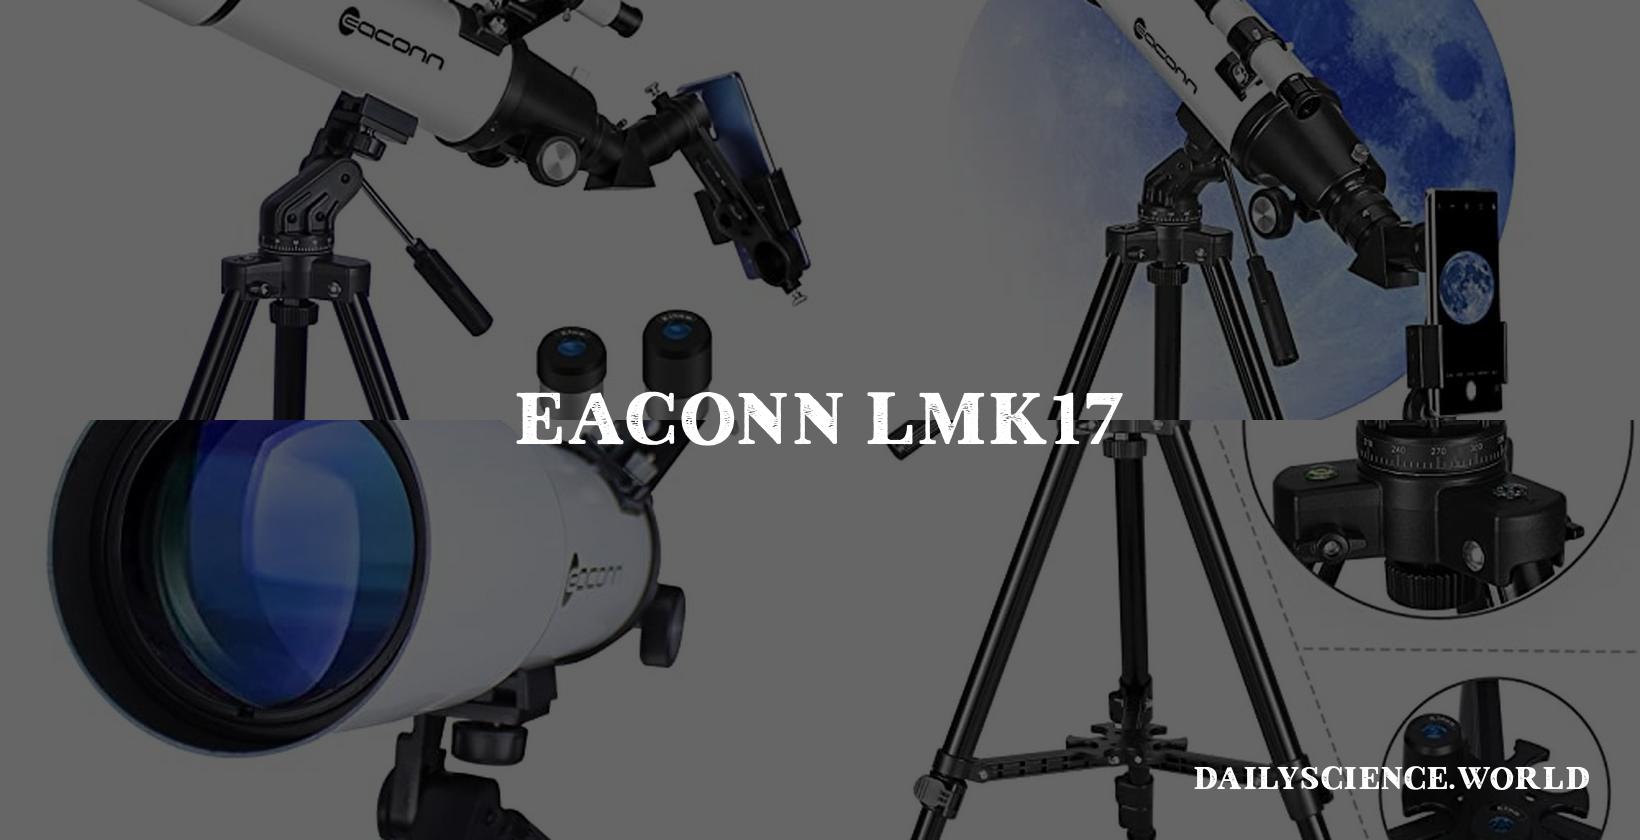 EACONN LMK17 Astronomical Telescope Review